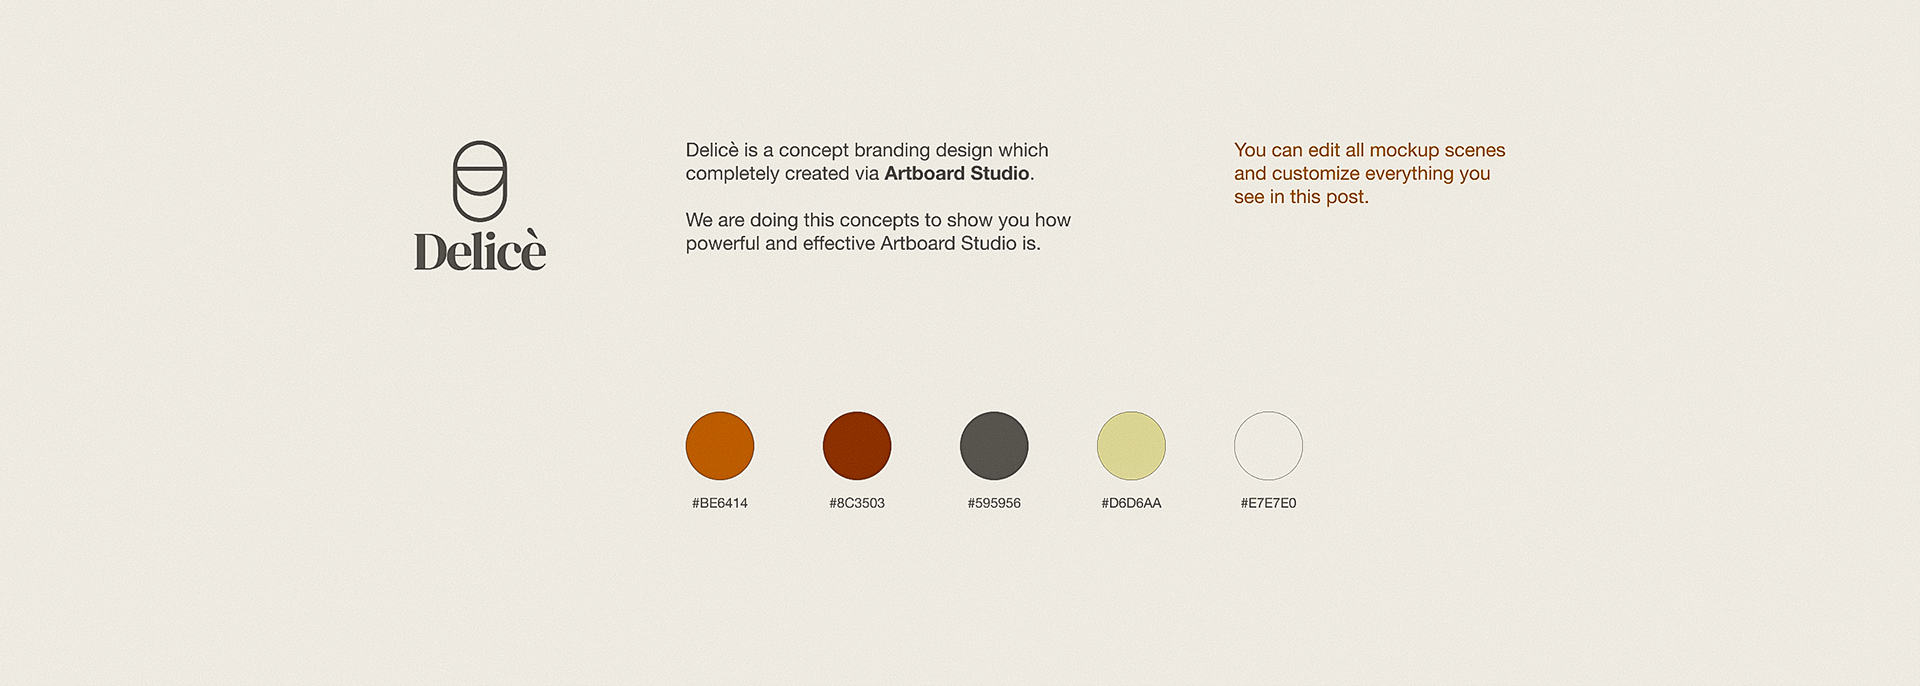 Artboard Studio introducing Delicè, a free customizable Brand Design Concept